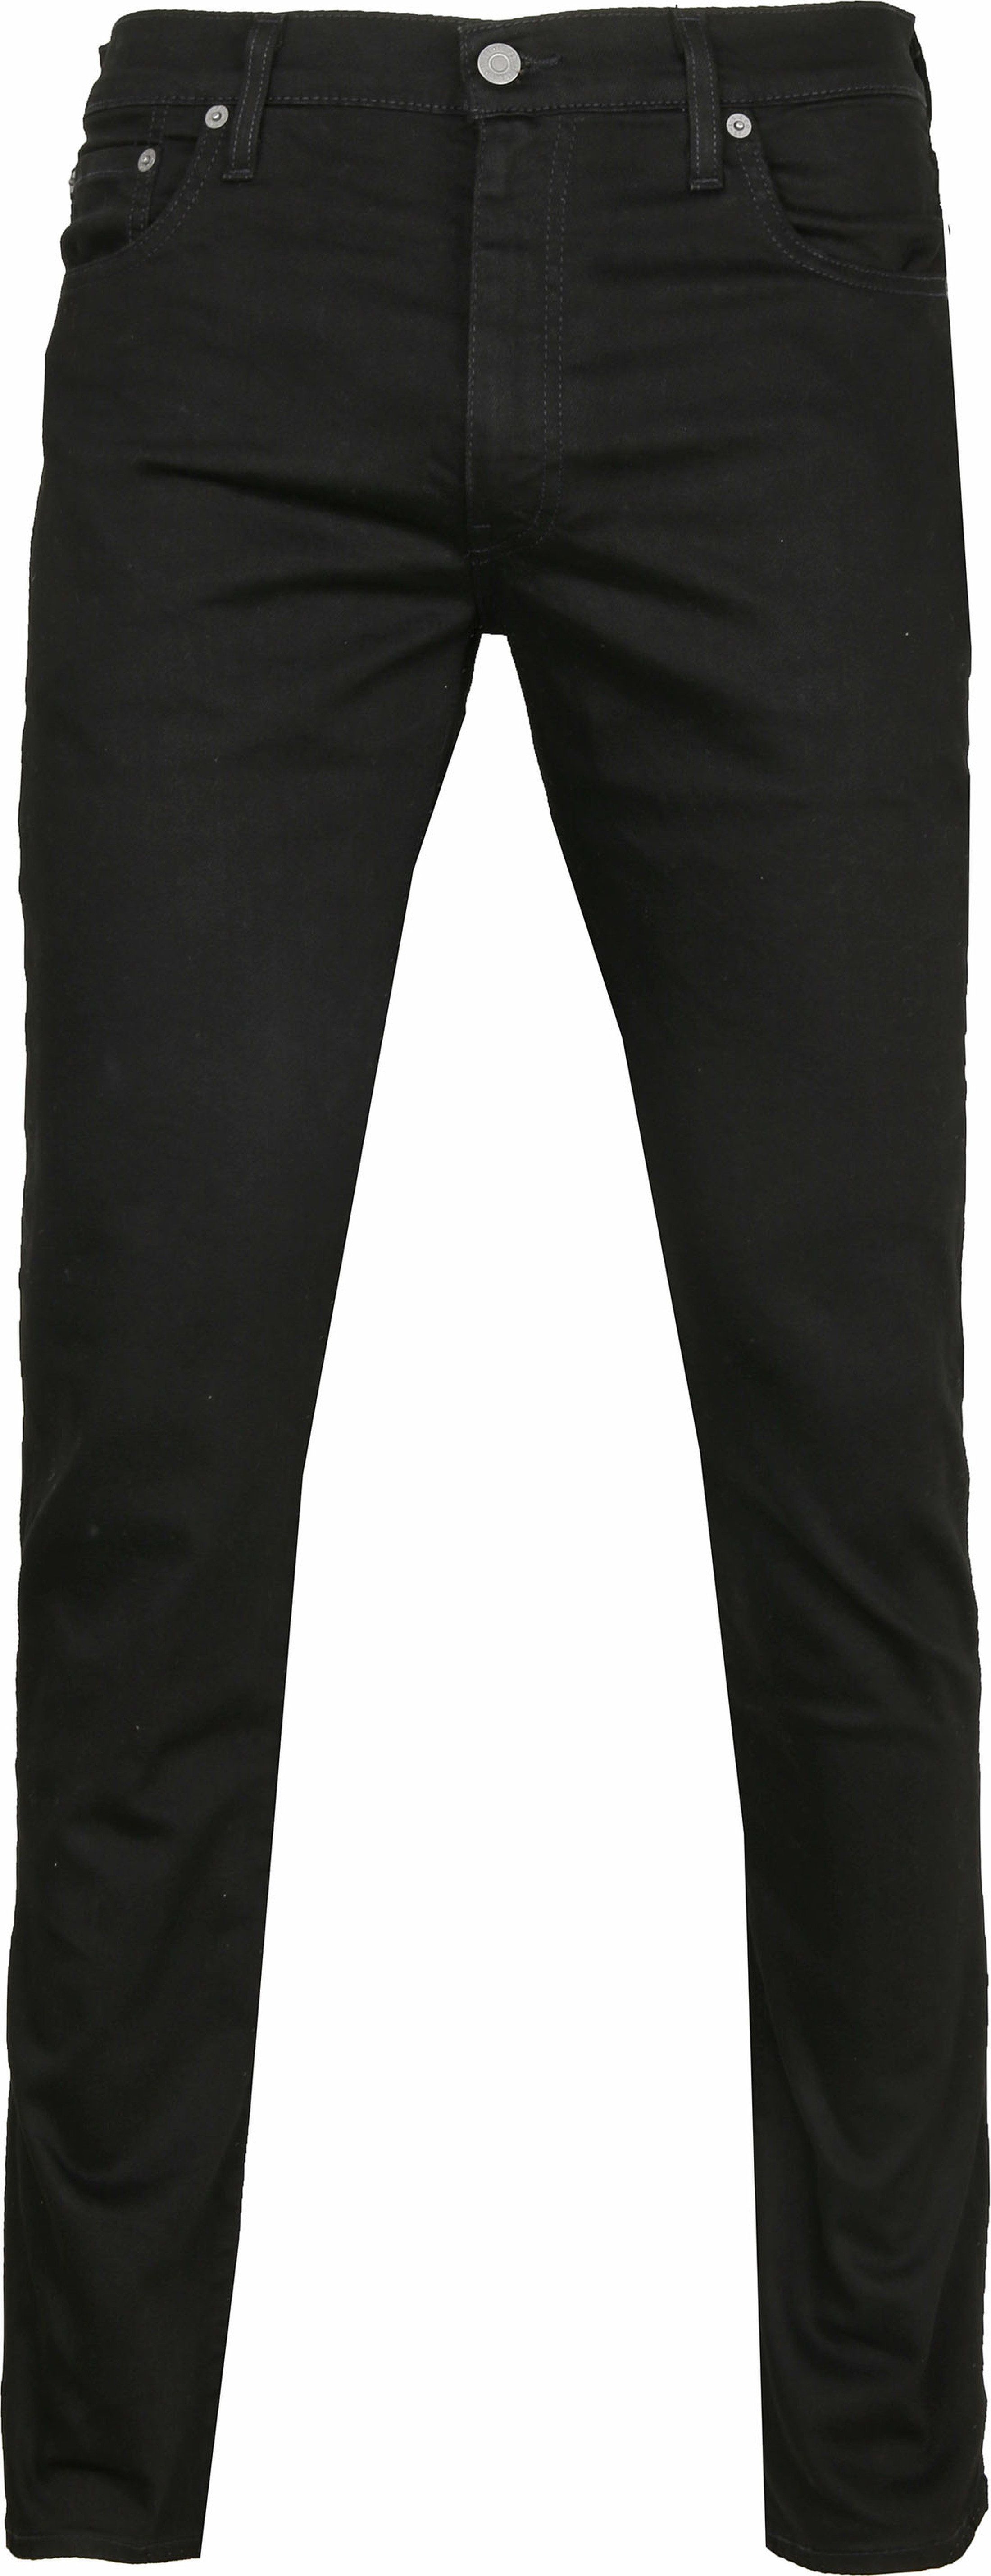 Levis - Levi's 511 jeans nightshine black size w 31